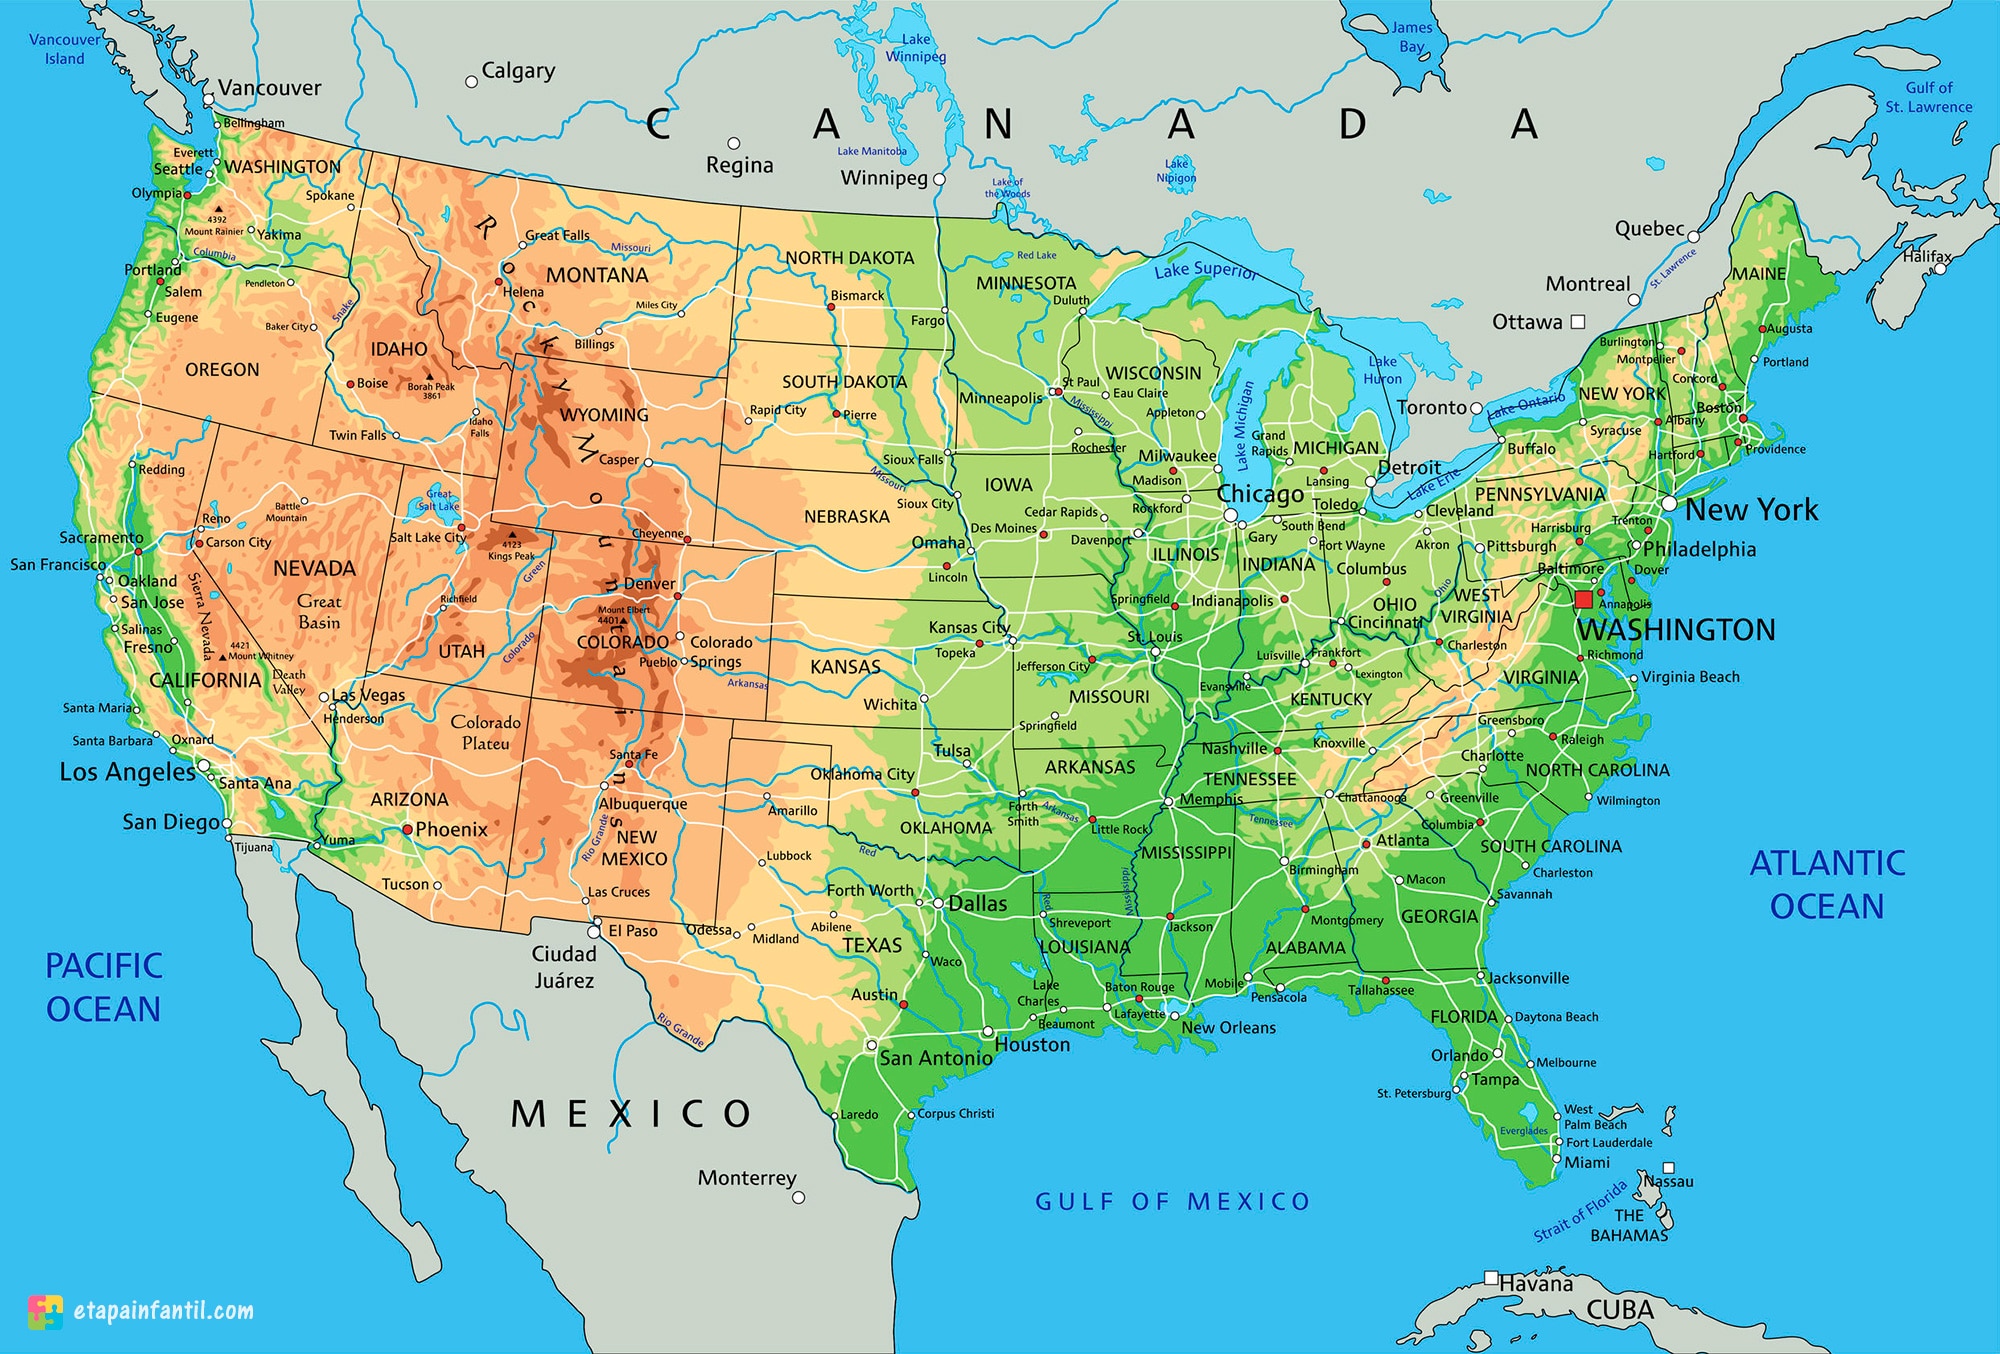 Tierras altas Banco de iglesia preferir Mapas de Estados Unidos para imprimir - Etapa Infantil